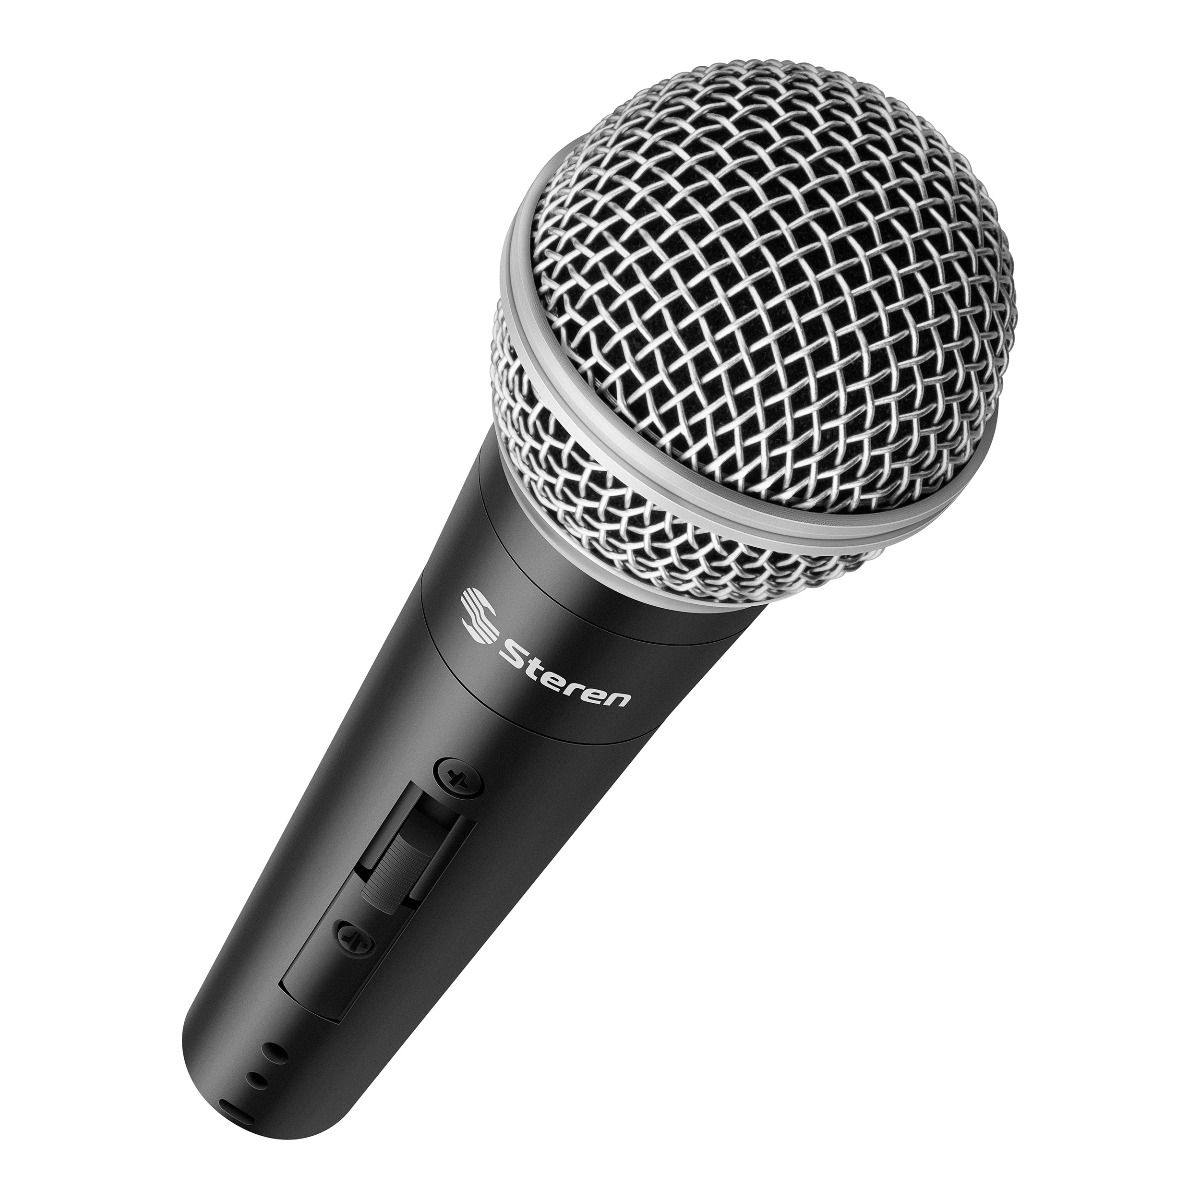 Micrófono profesional para voz Steren Tienda en Línea